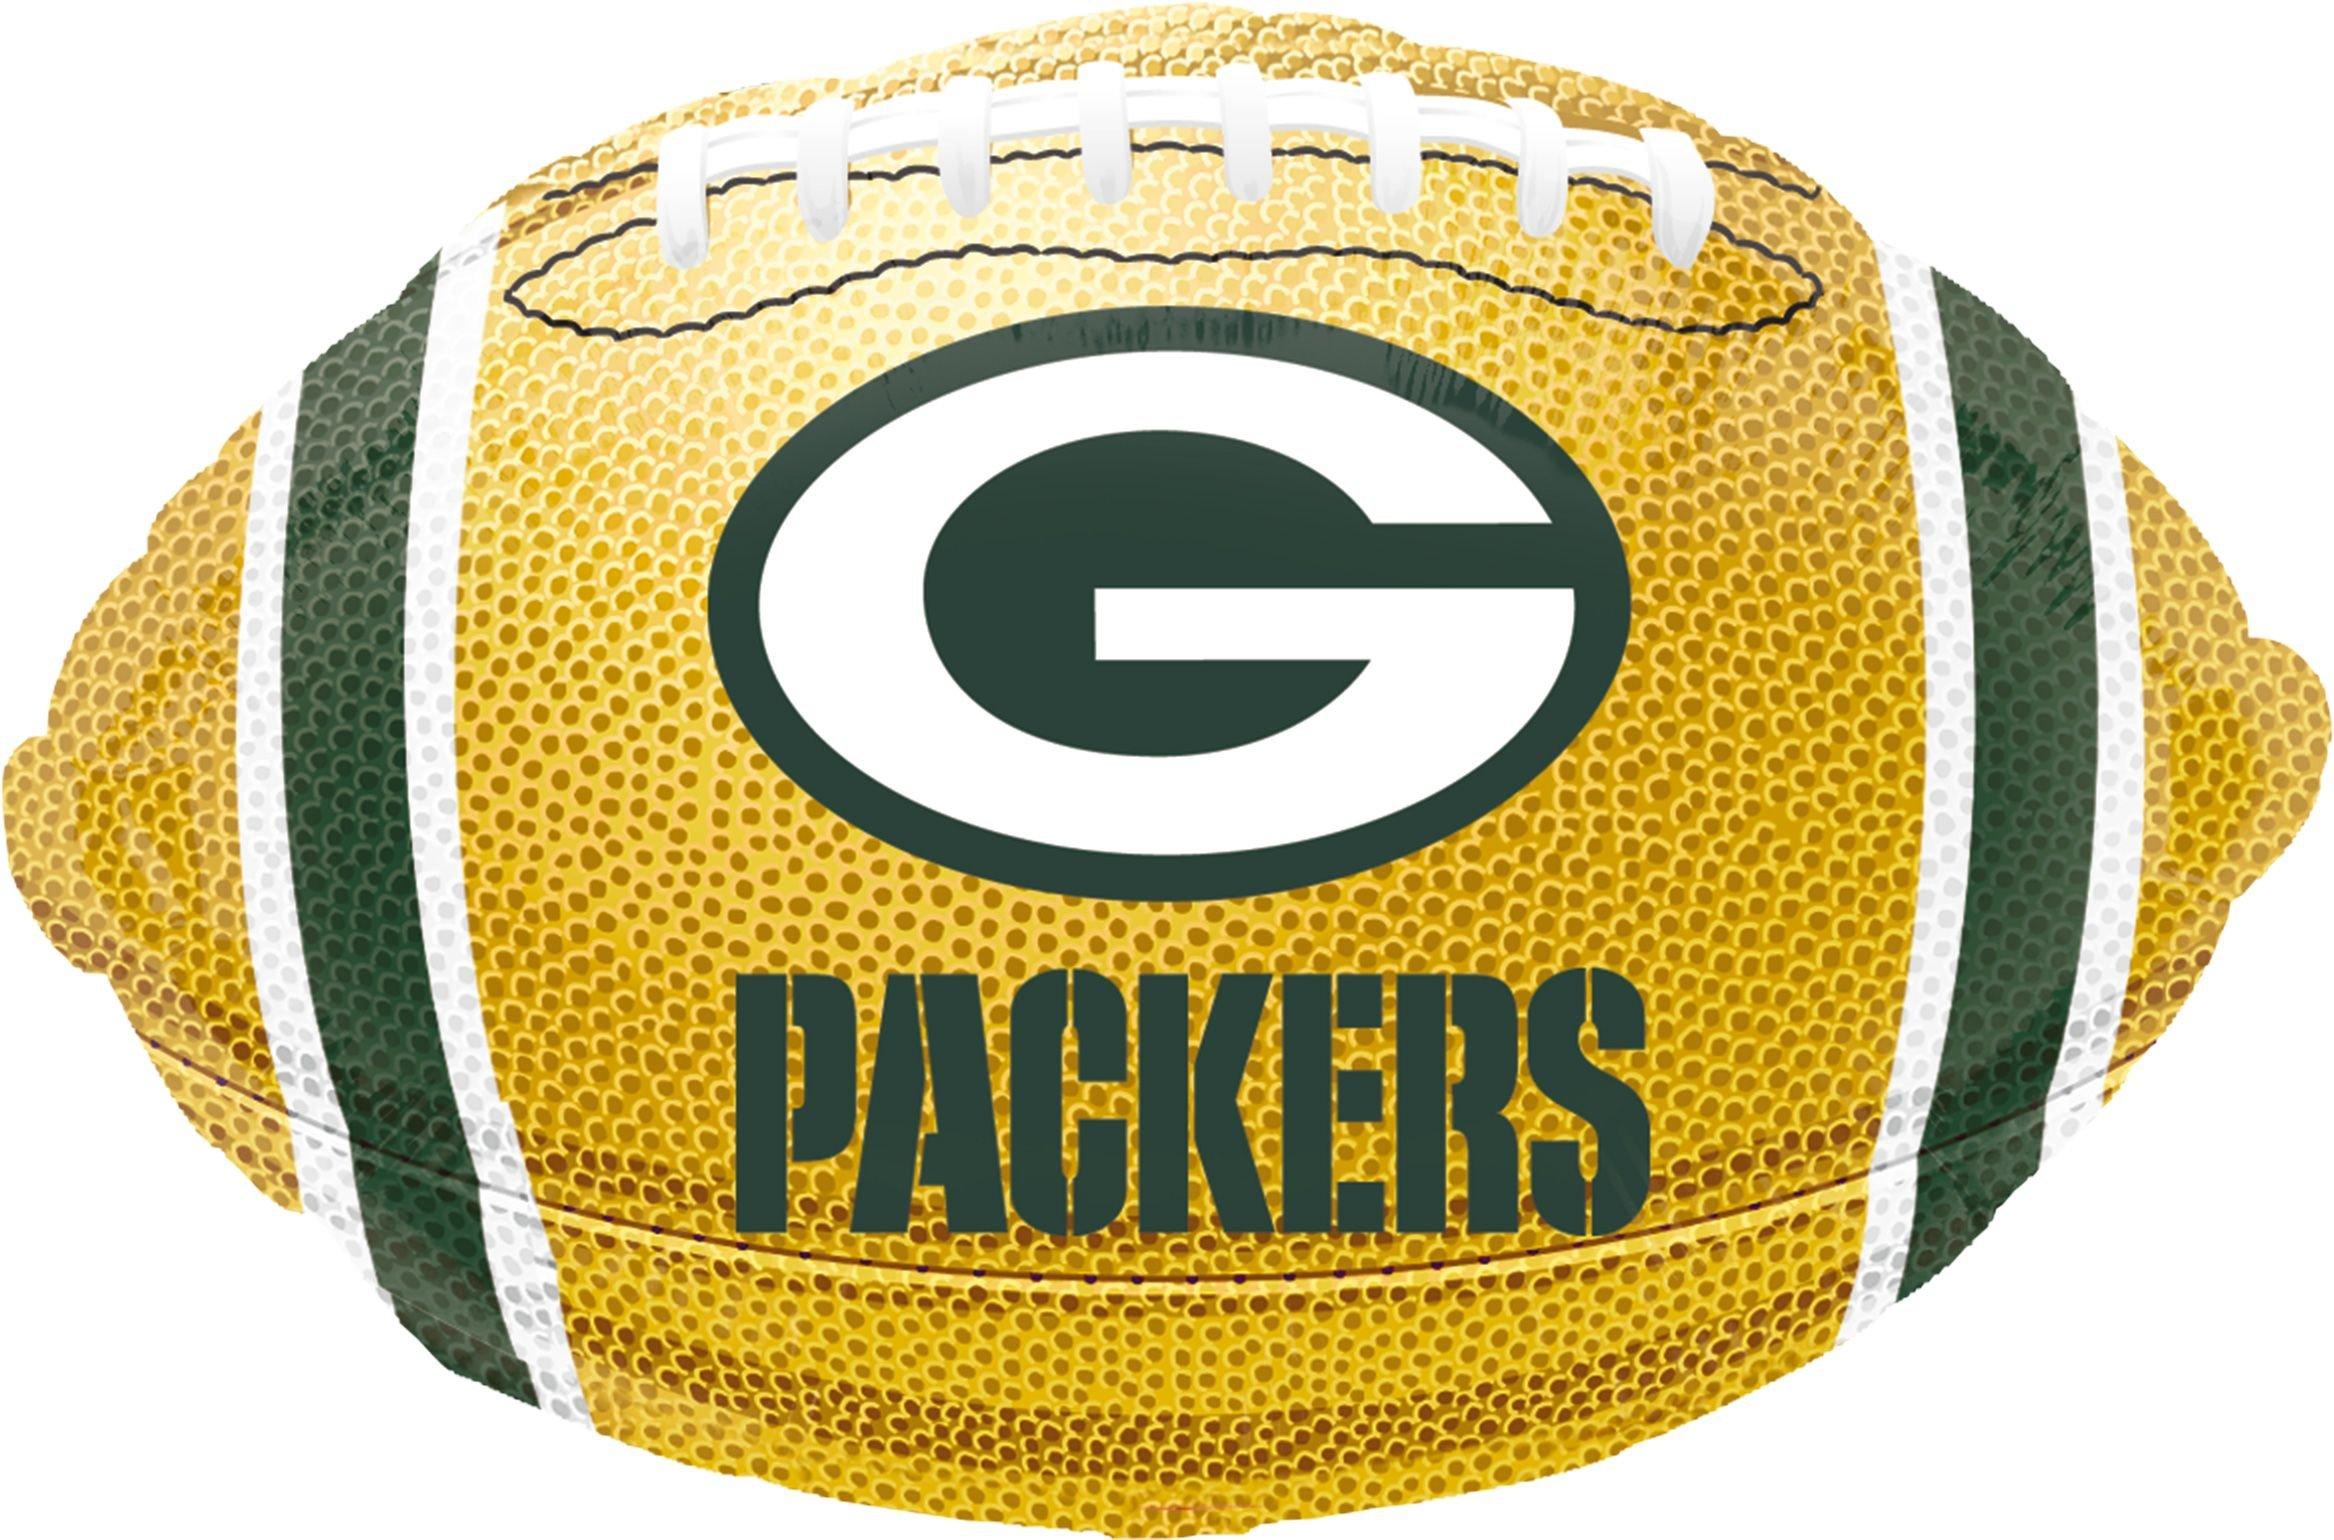 Green Bay Packers Balloon - Football